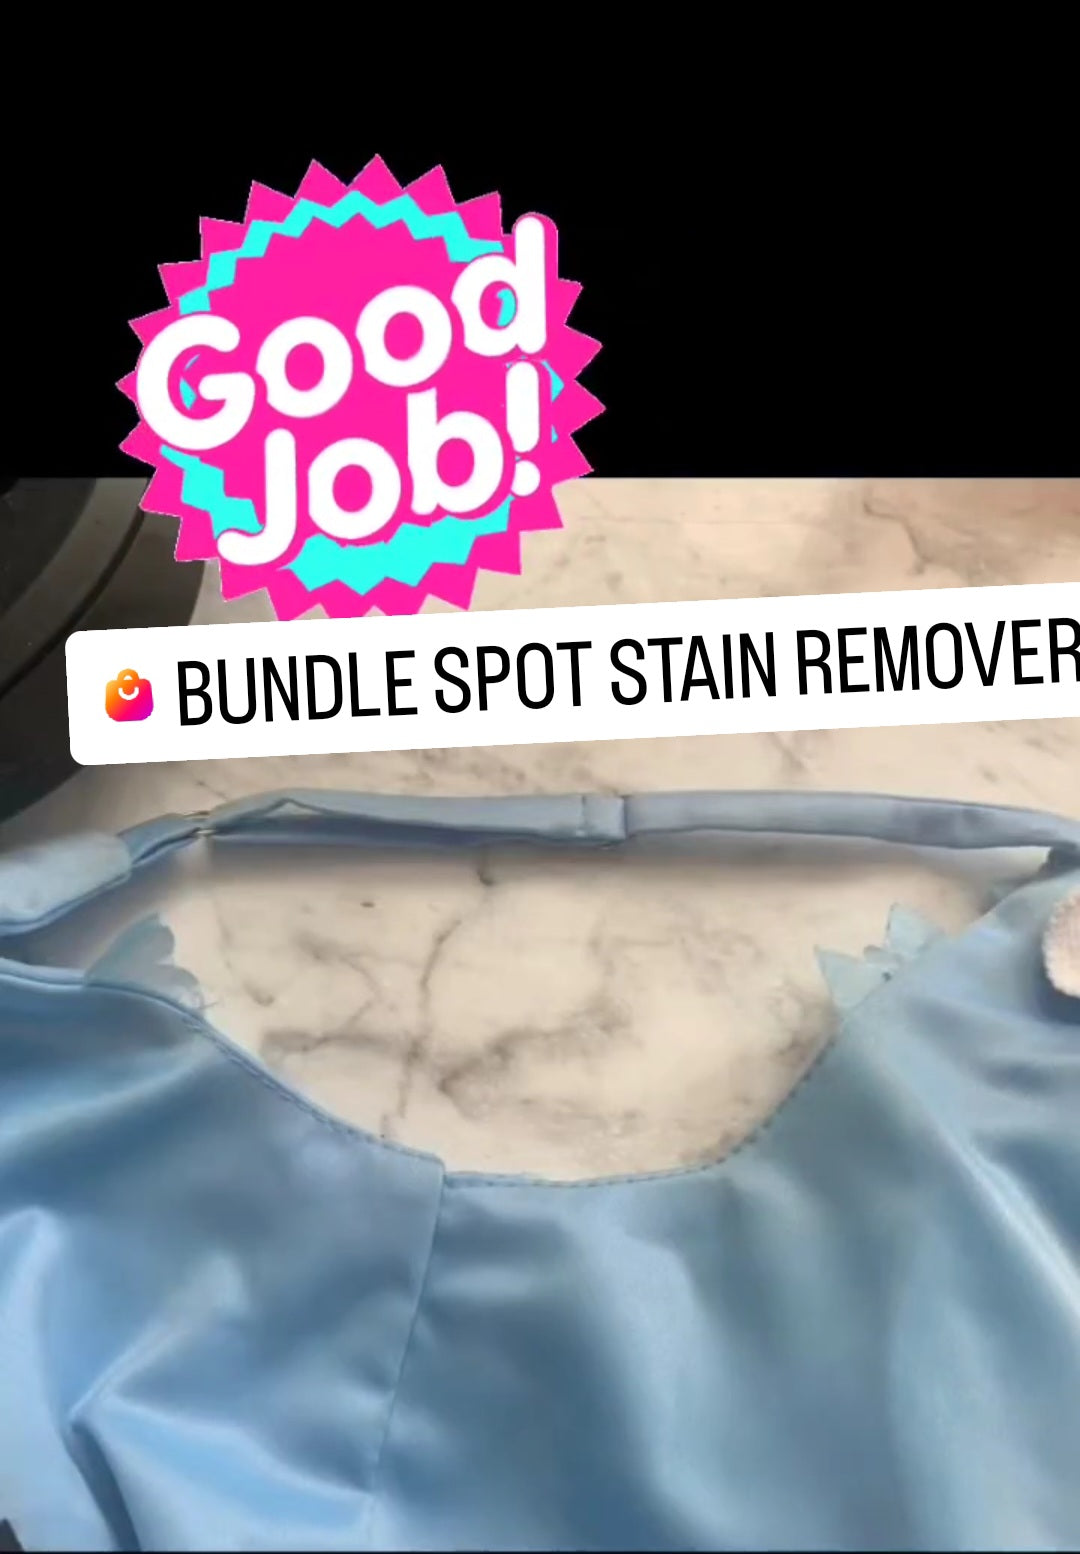 Best Seller Bundle 500ml Spot Stain Remover